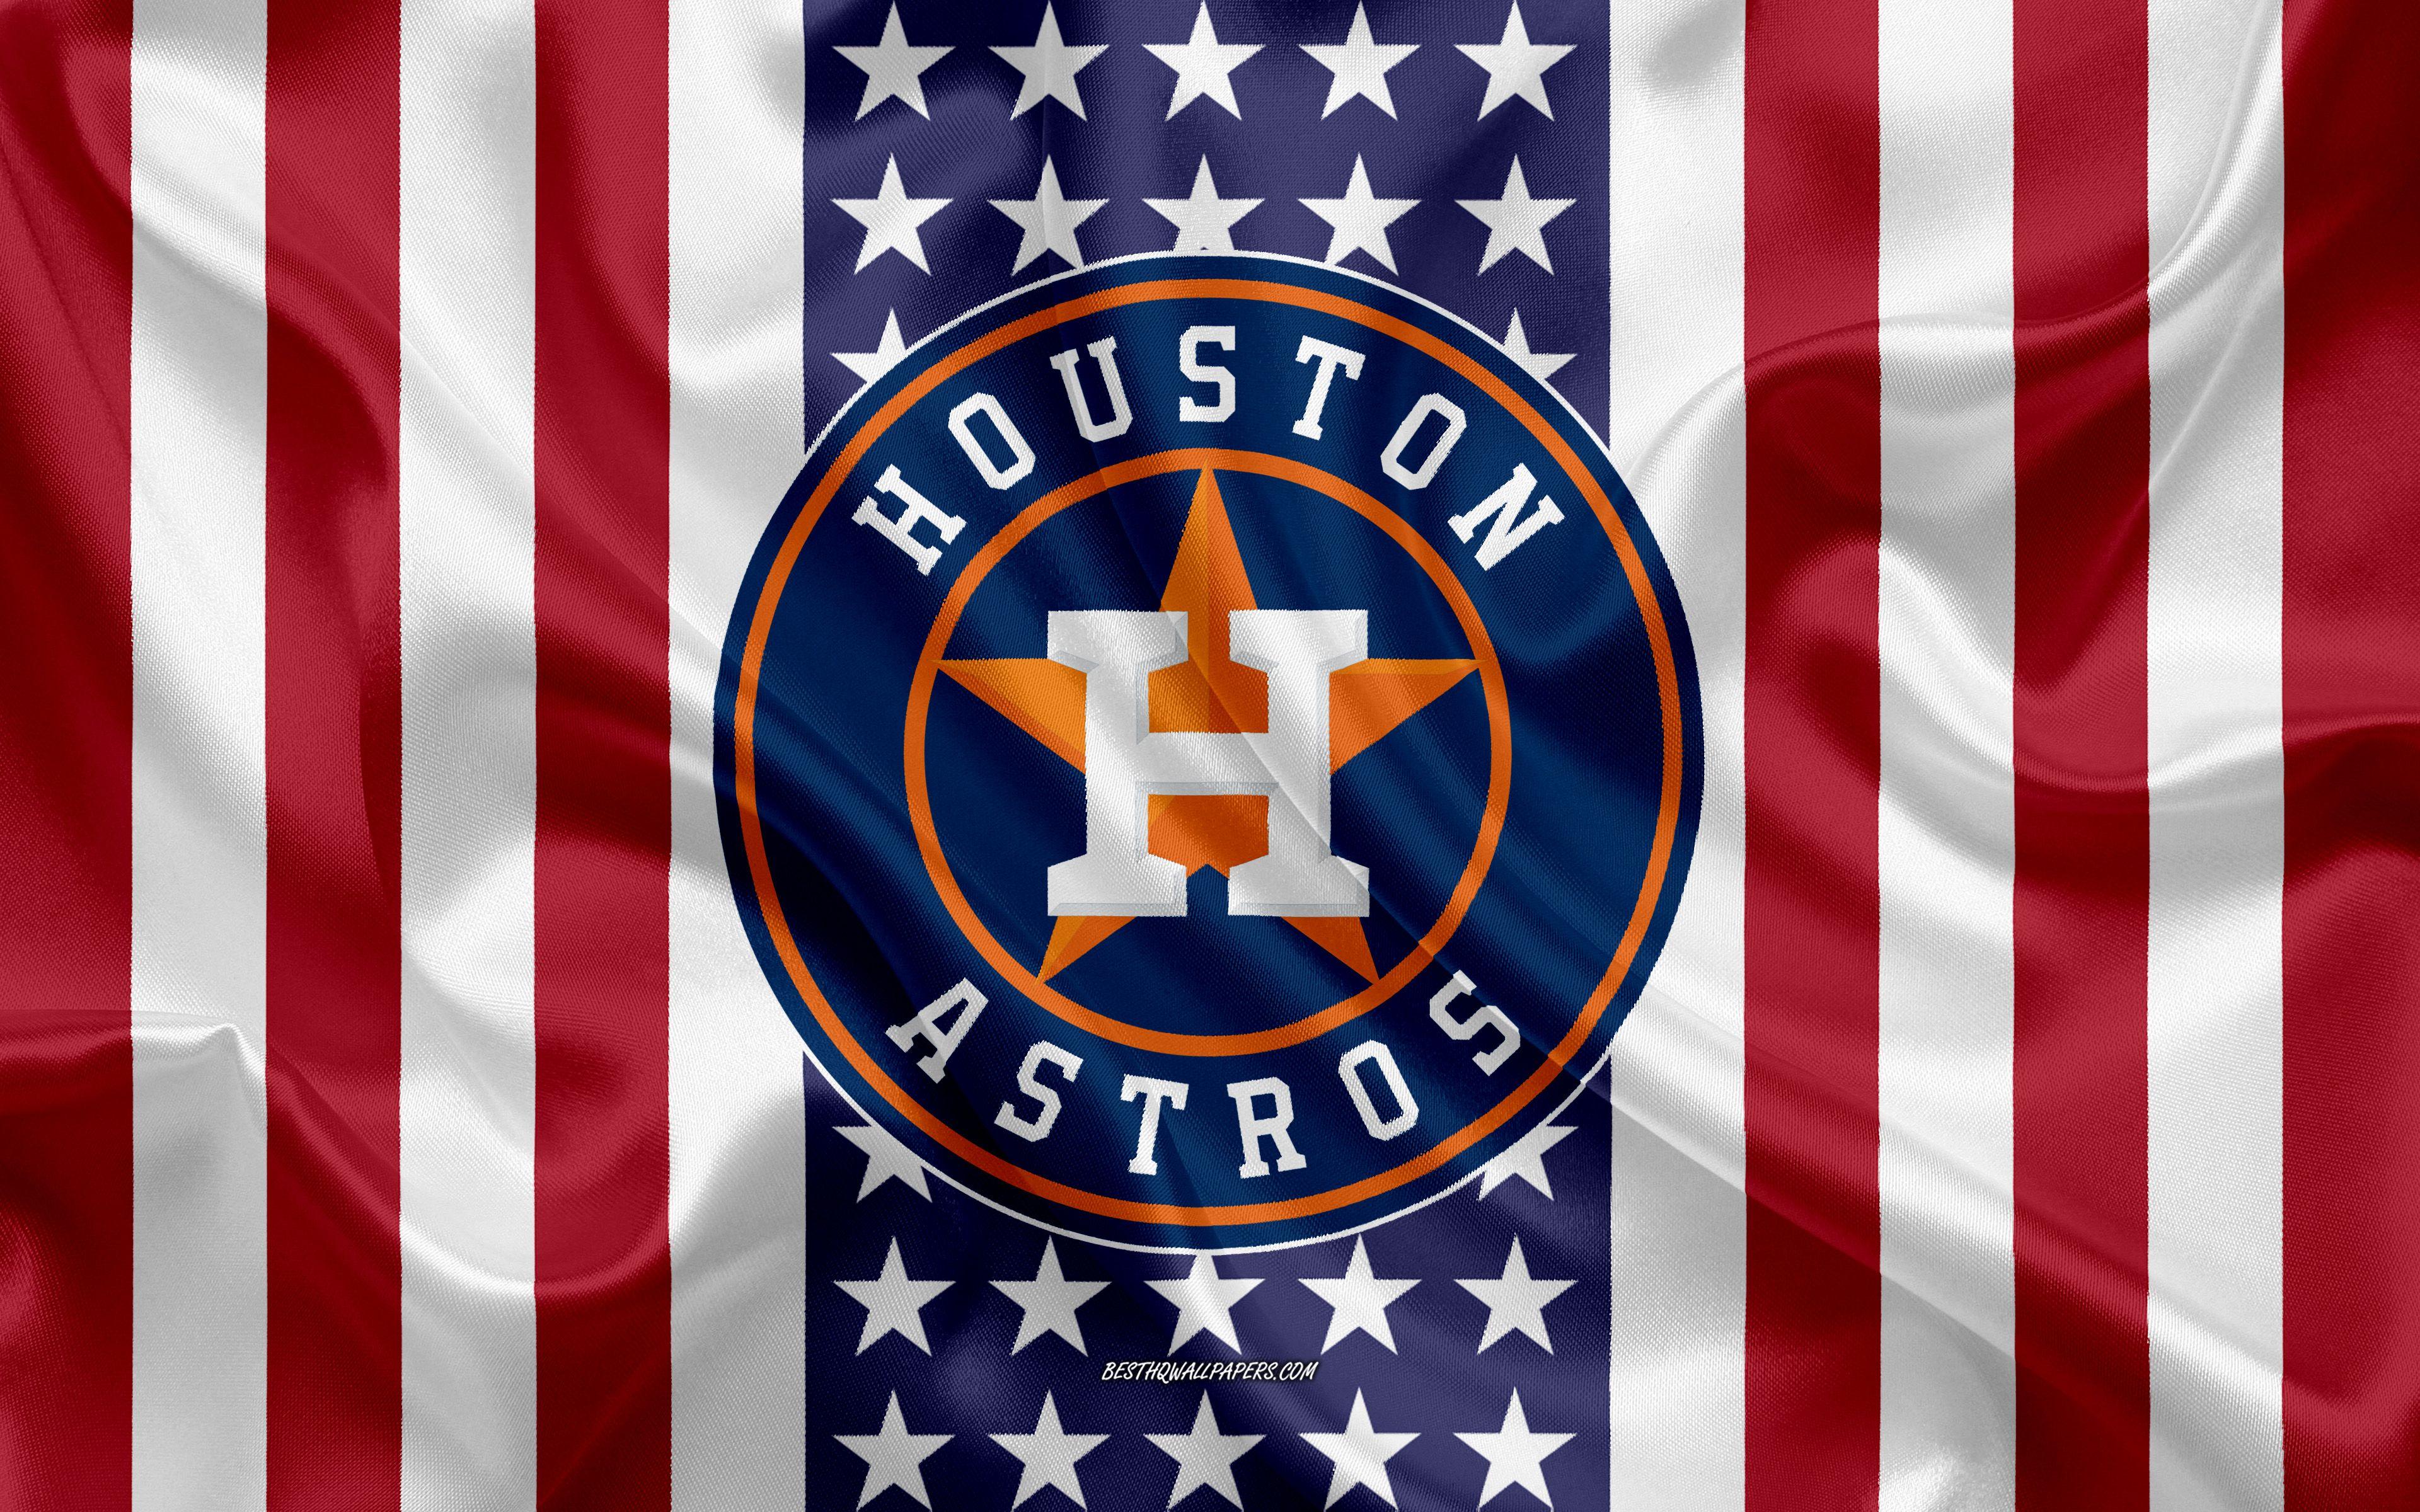 Houston Astros Retro Logo 3D Metal Artwork  Hex Head Art